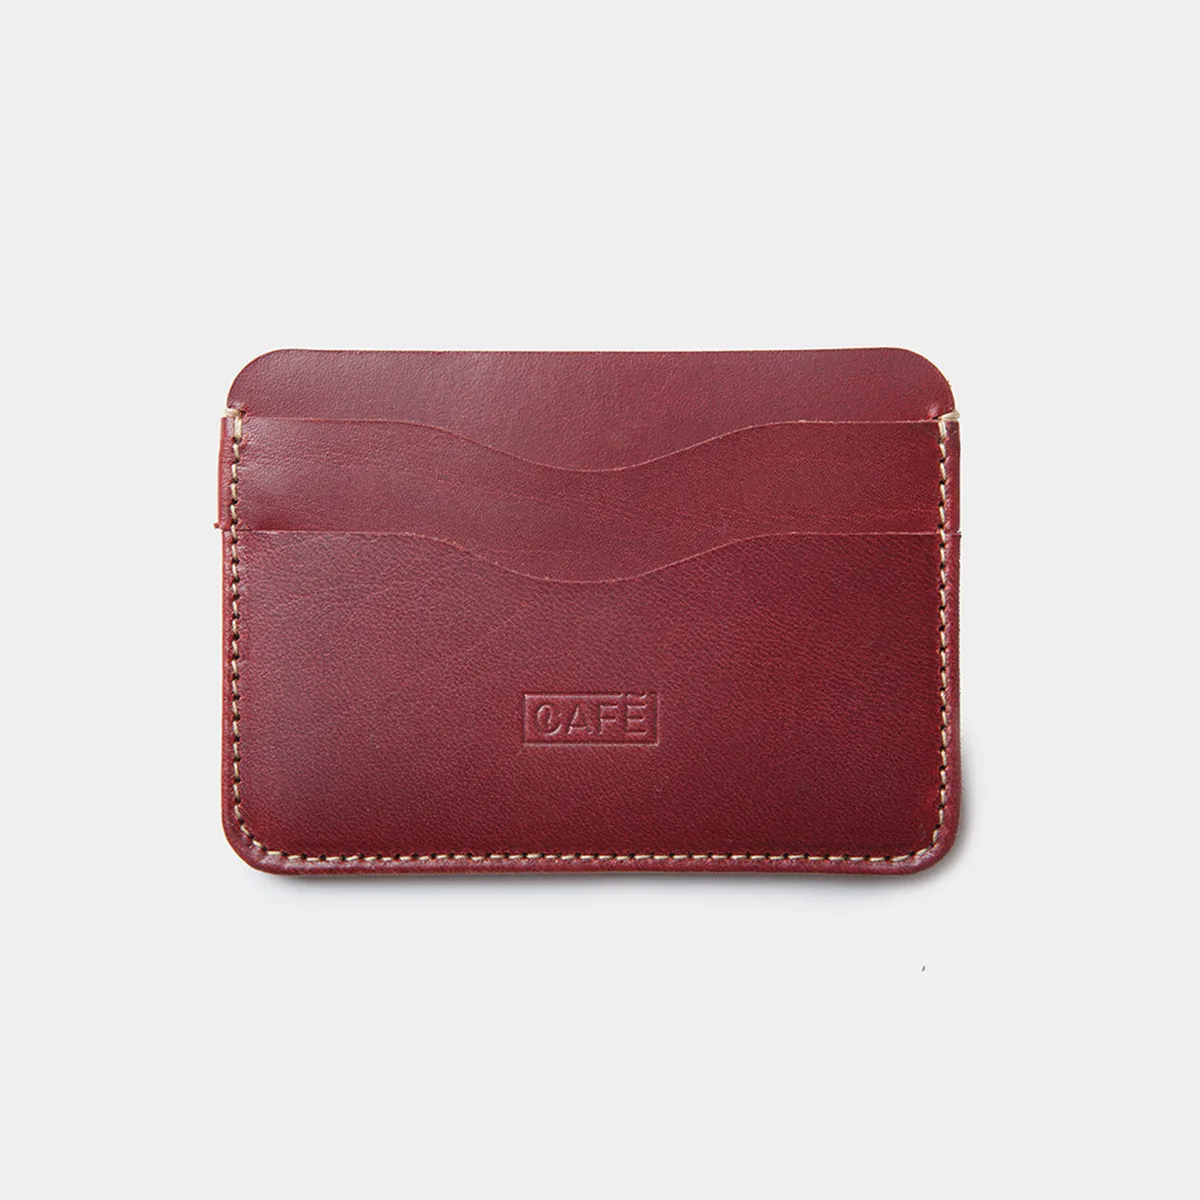 leather cardholder red